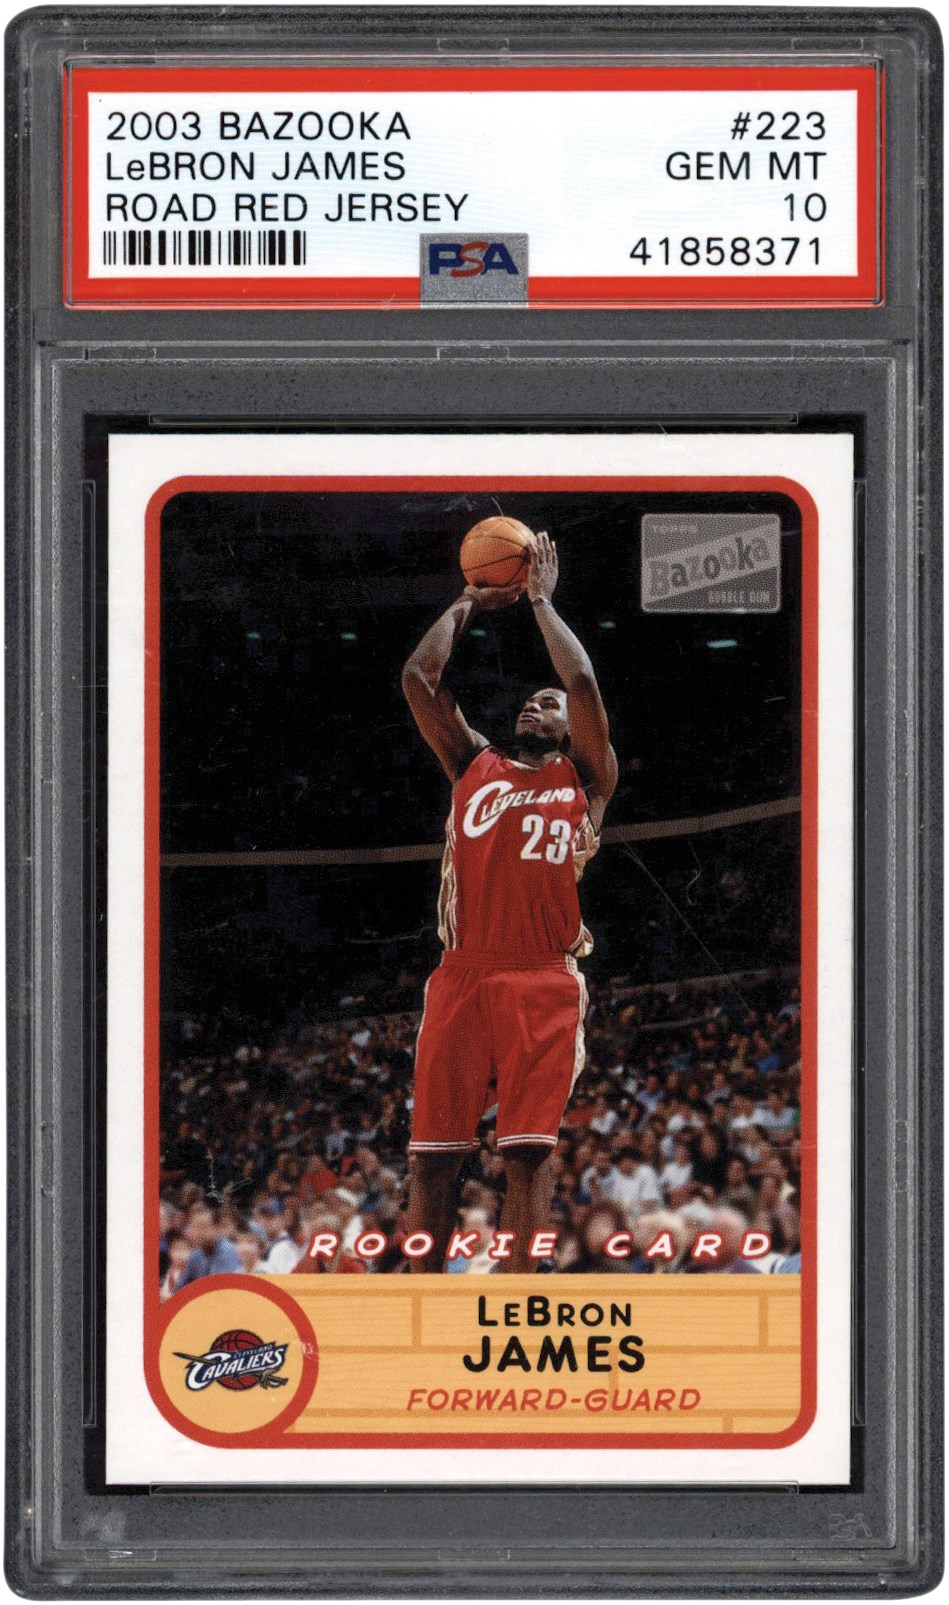 2003 Bazooka Basketball #223 LeBron James Red Road Jersey Rookie Card PSA GEM MINT 10